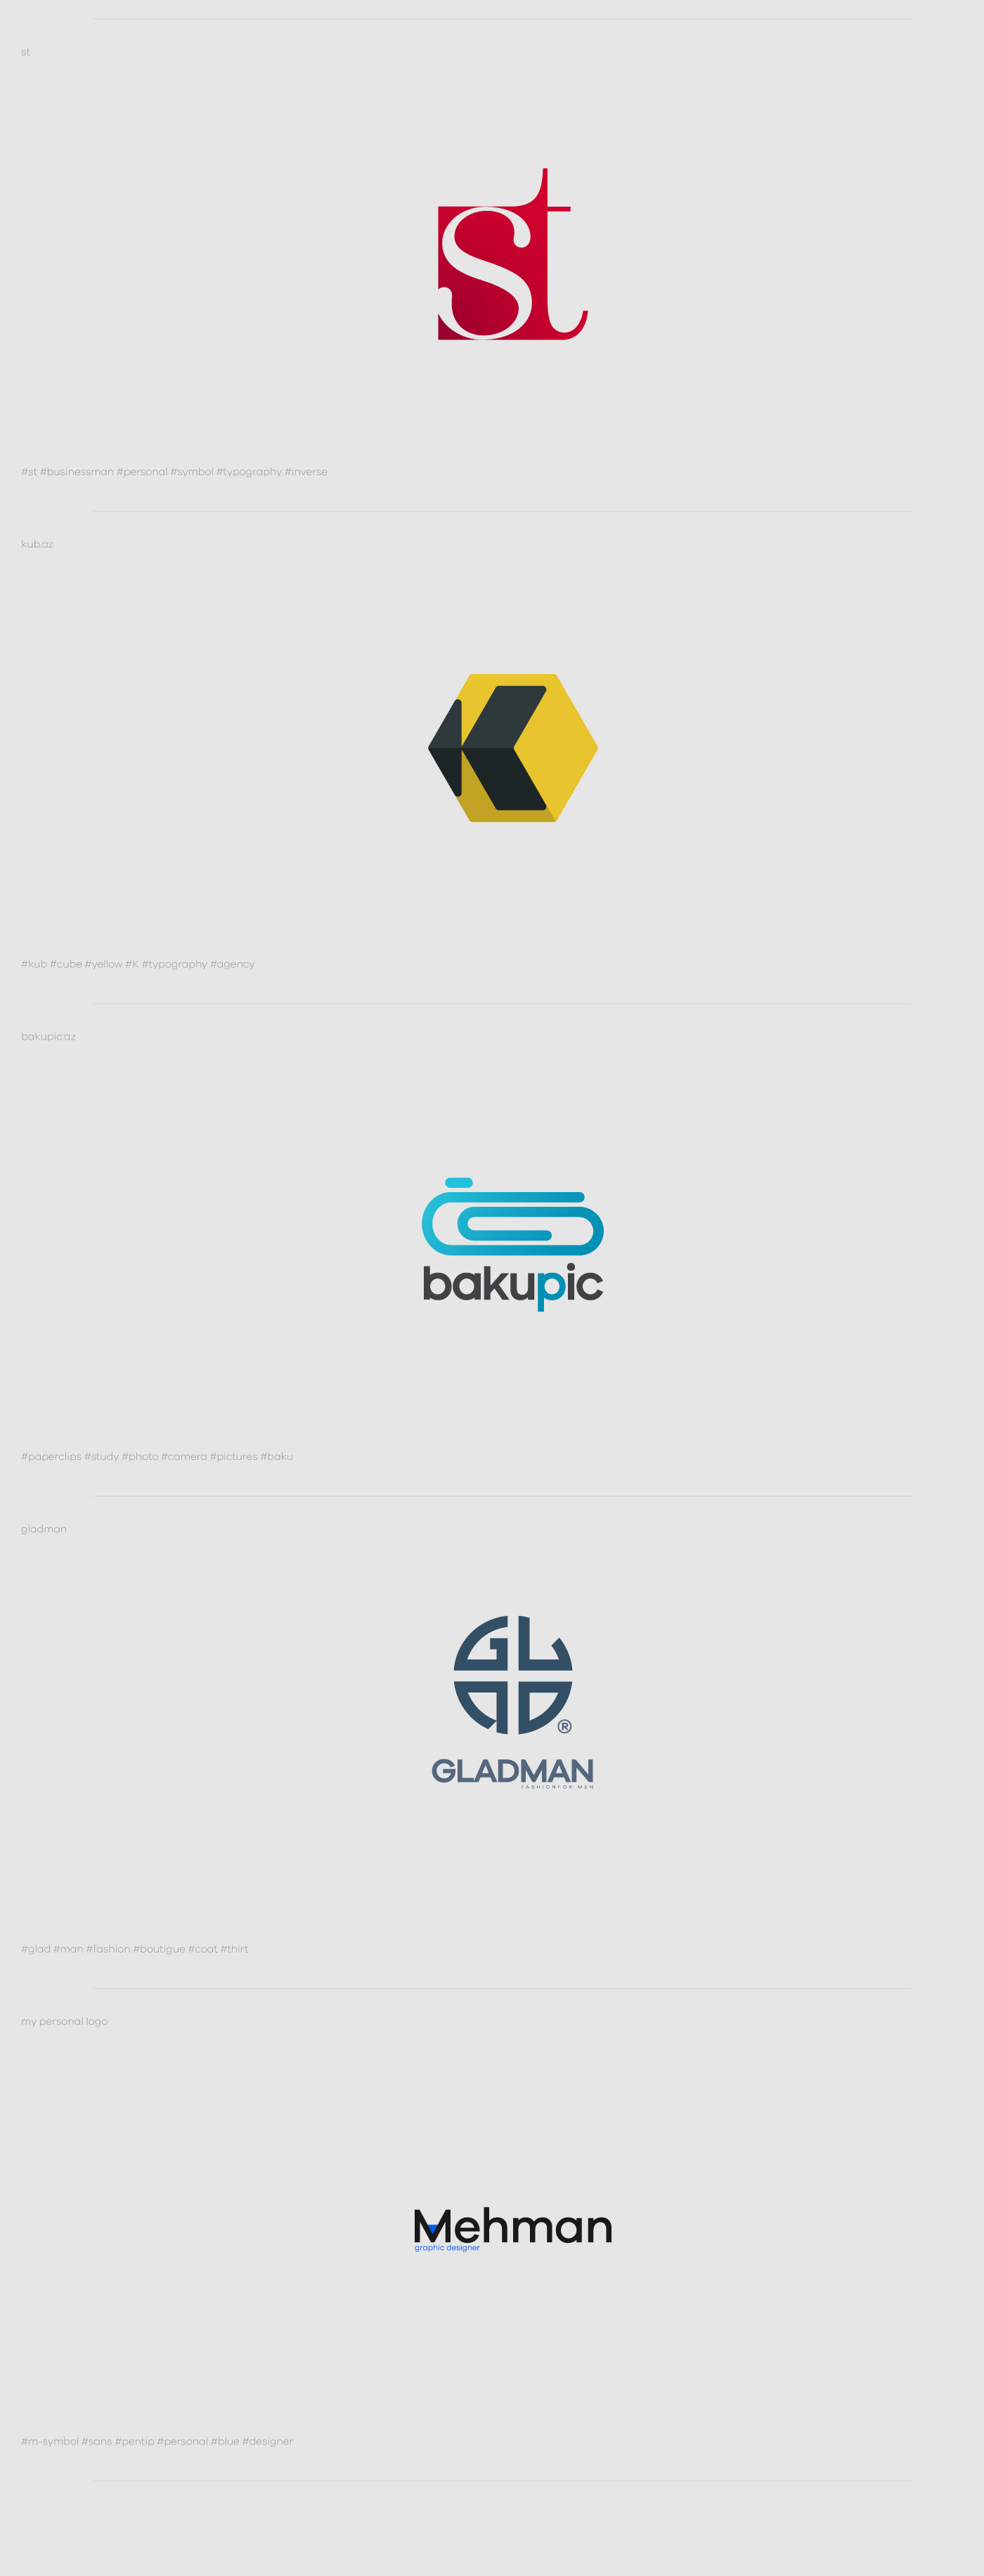 logo logofolio brand marks inspiration agency graphic flat company service